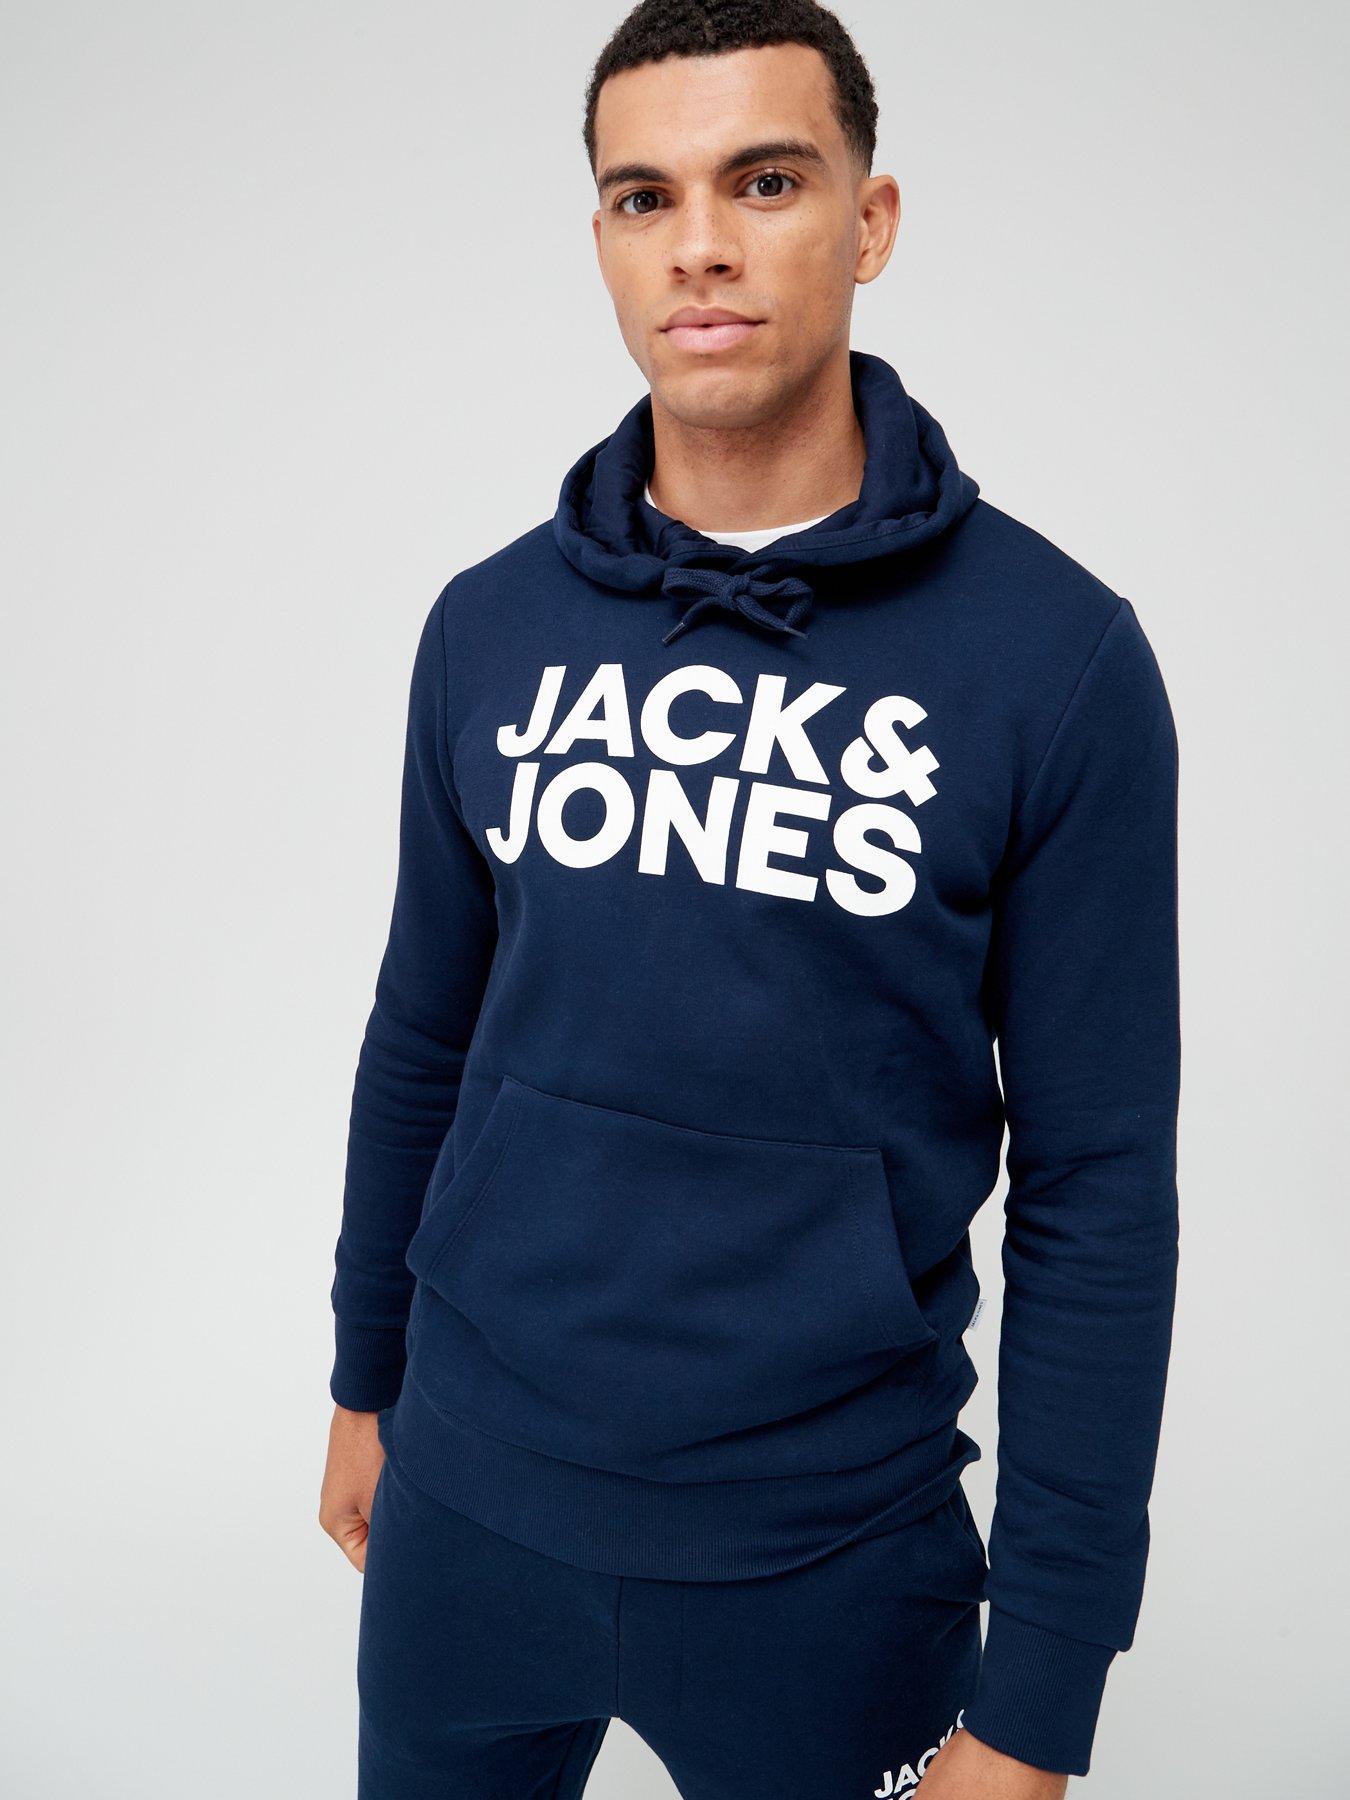 Navy Blue XL MEN FASHION Trousers Wide-leg discount 56% Jack & Jones tracksuit and joggers 